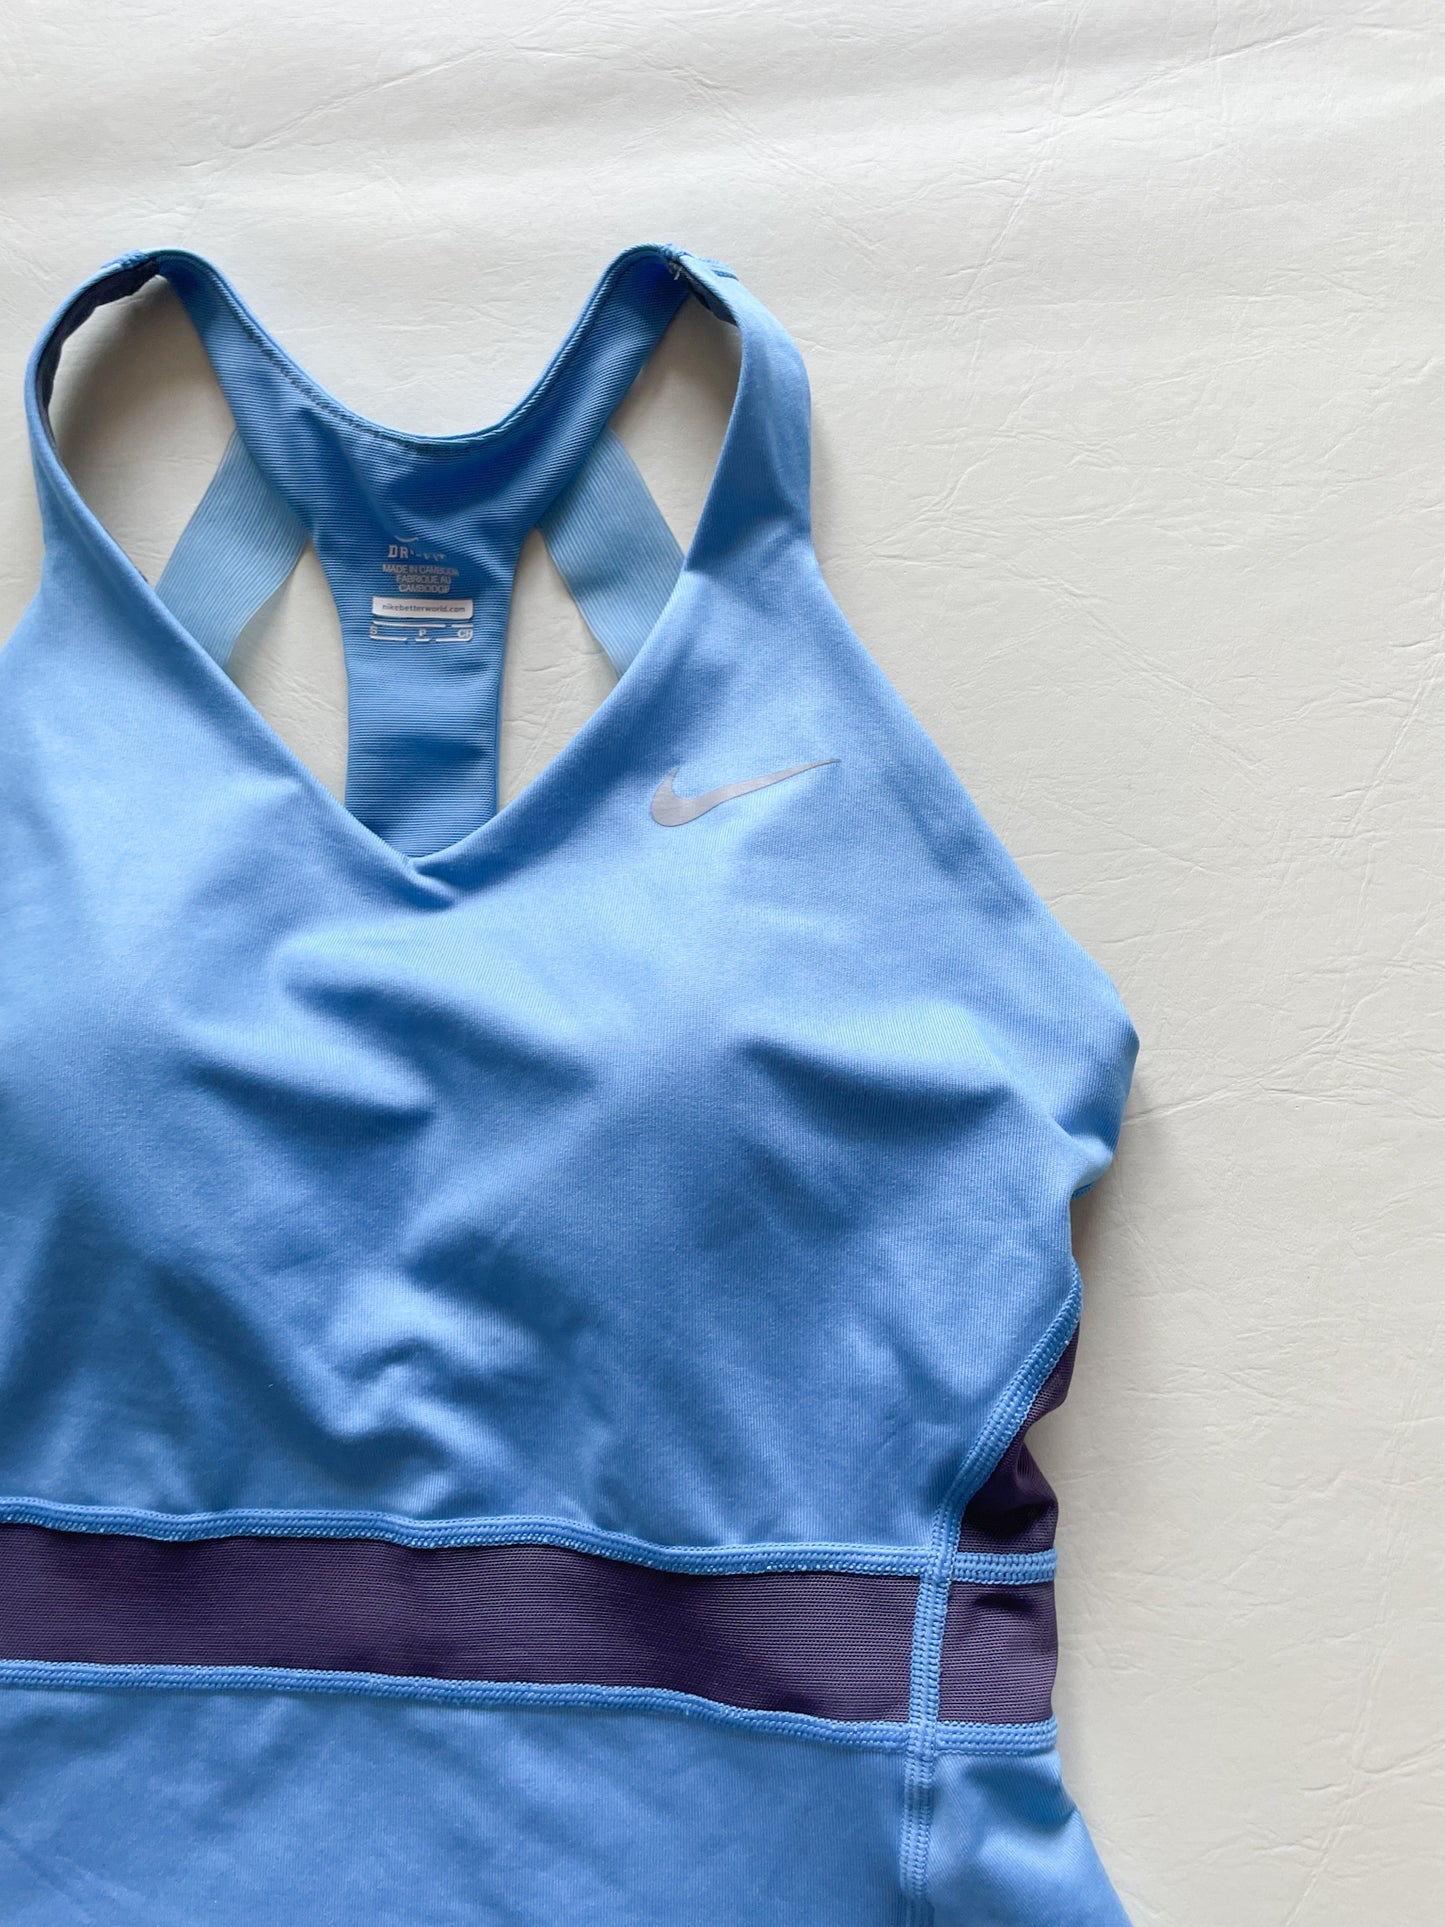 Nike Blue Cutout Back Workout Tennis Top - Small